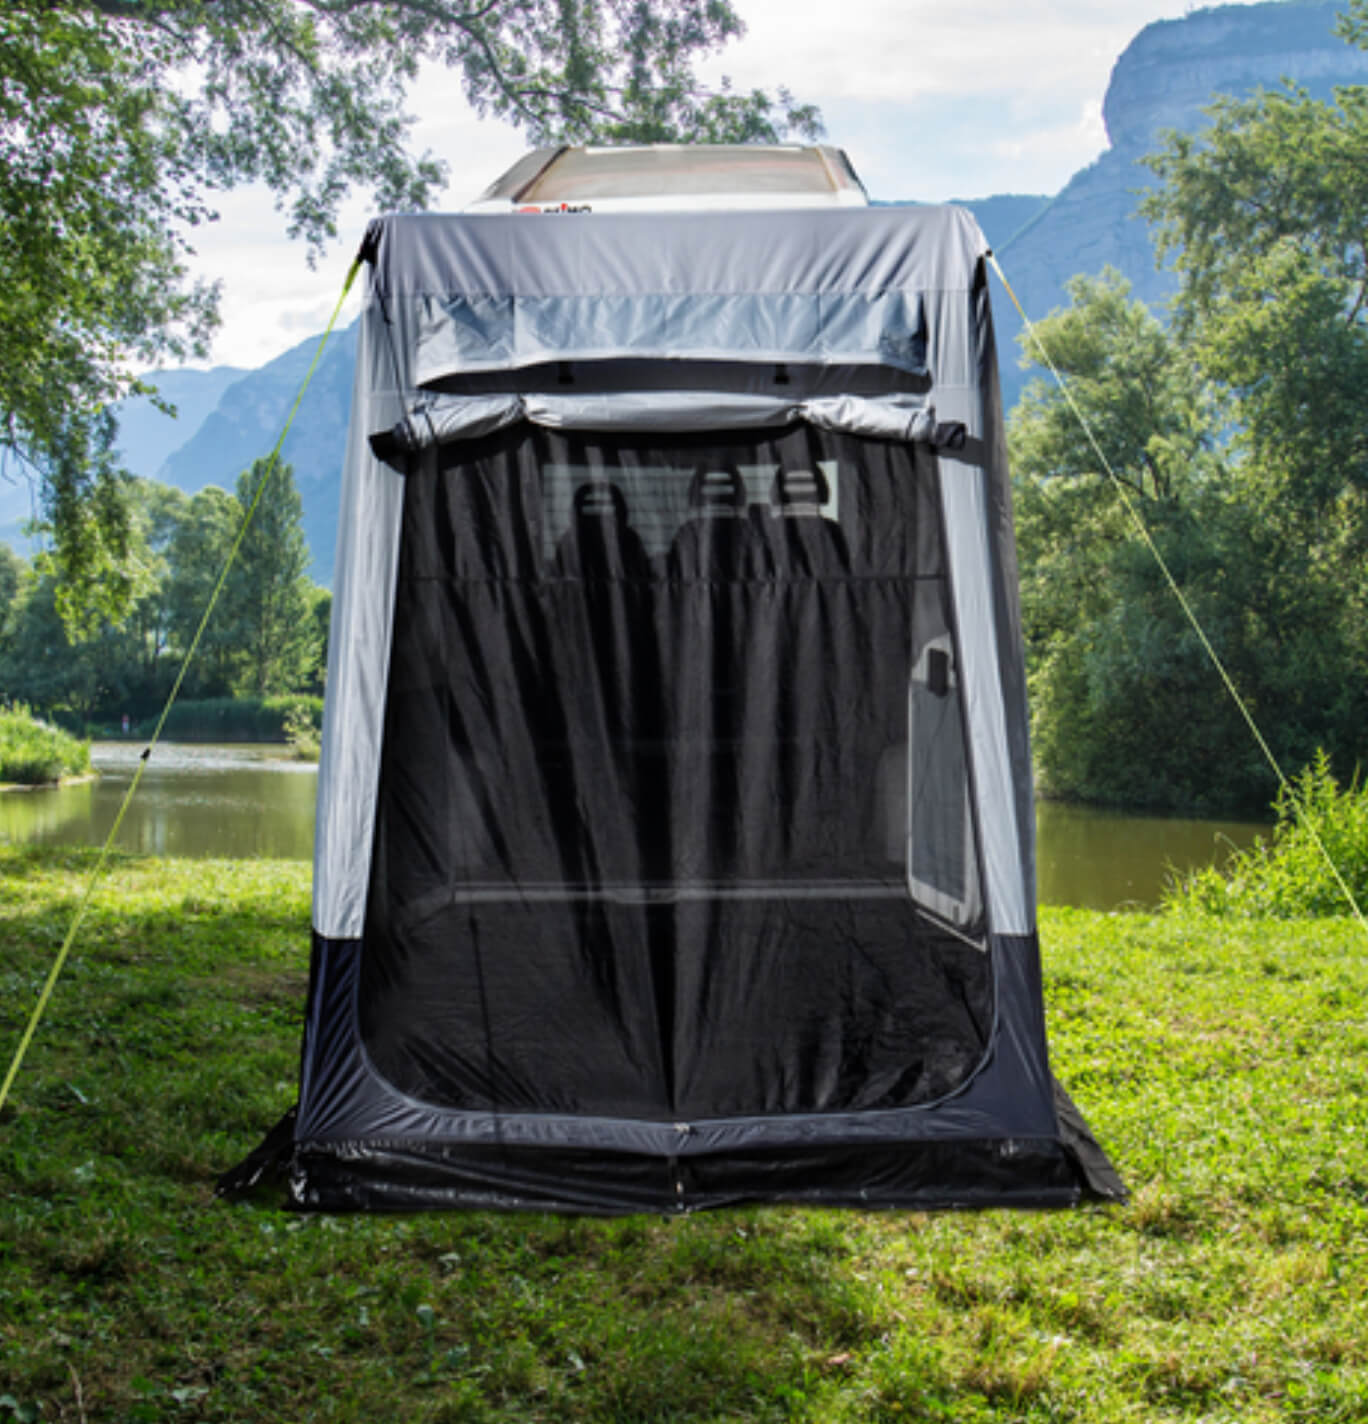 Reimo Ducatissimo Premium Rear Tent for Fiat Ducato Campervans